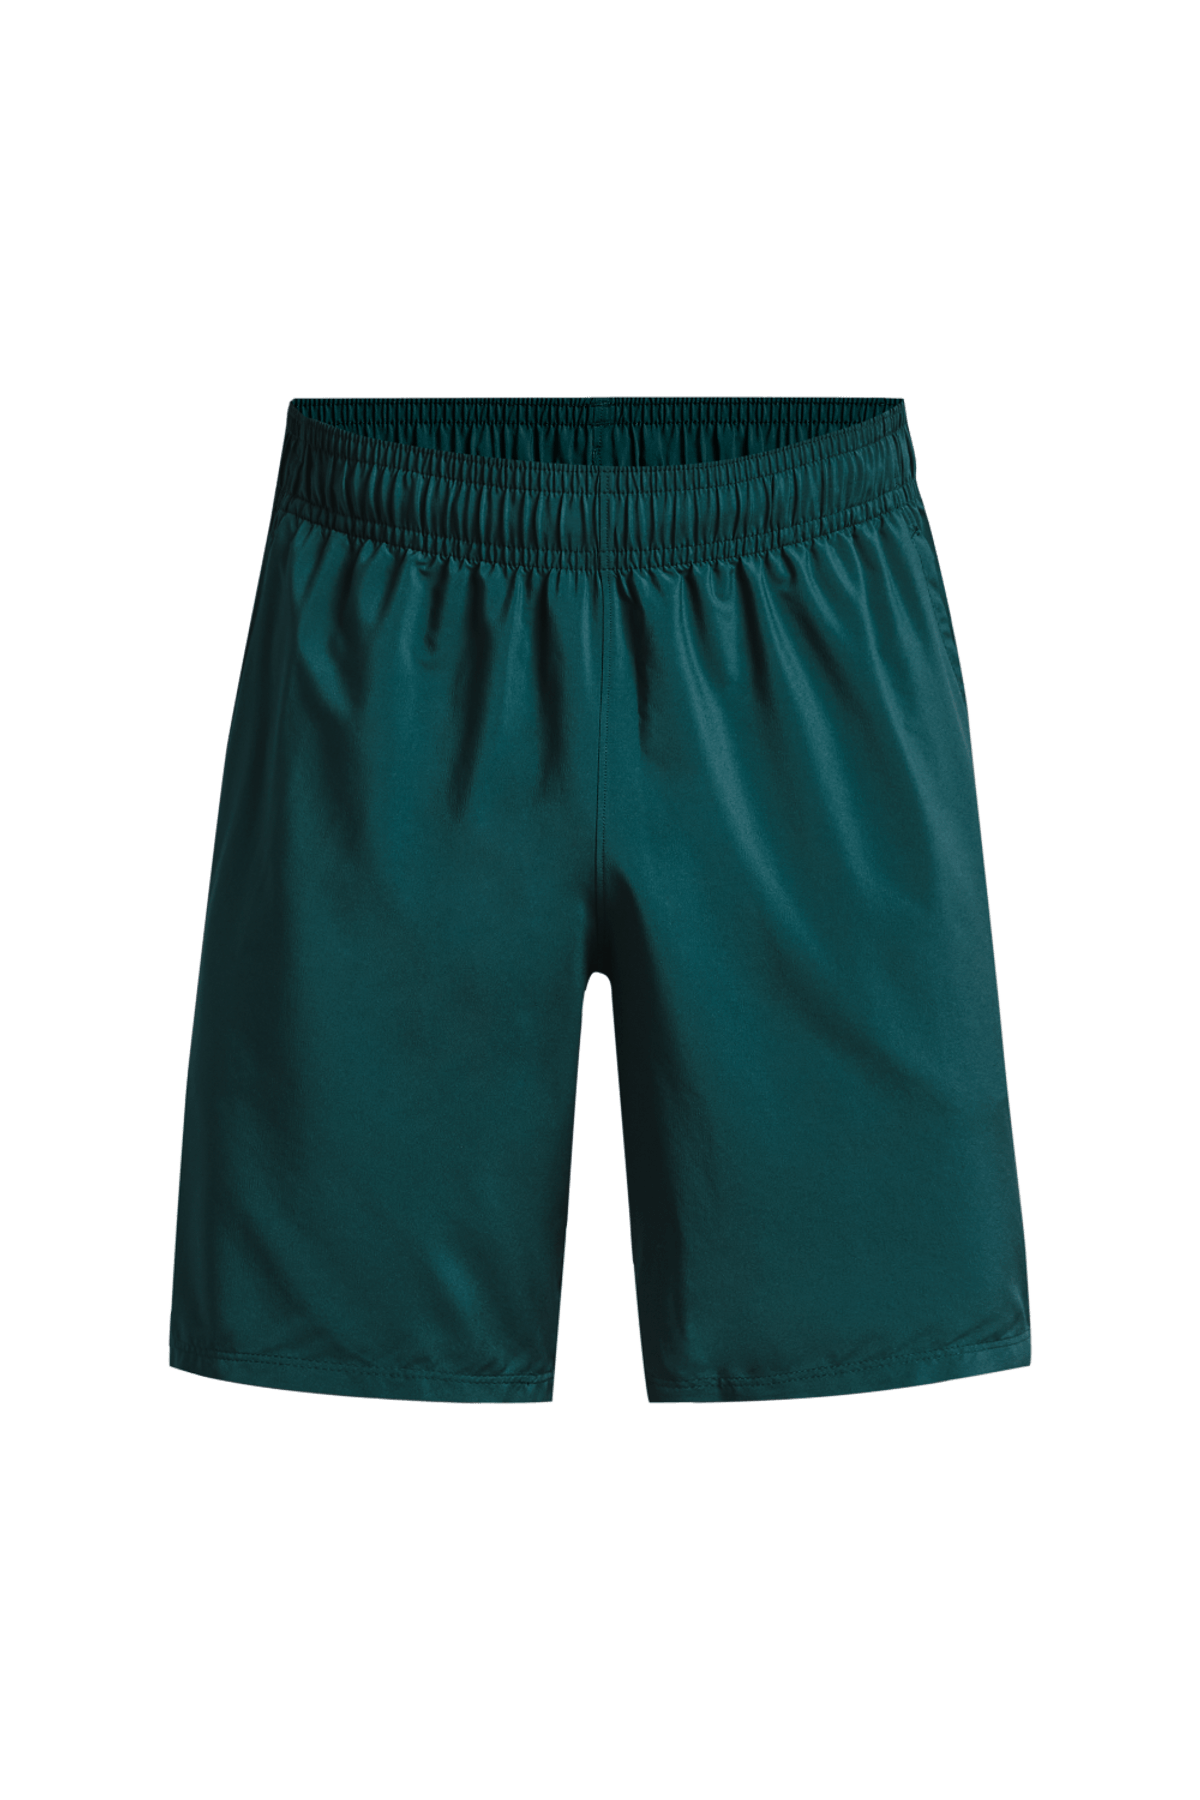 Pantaloneta Under Armour Woven Graphic - Verde